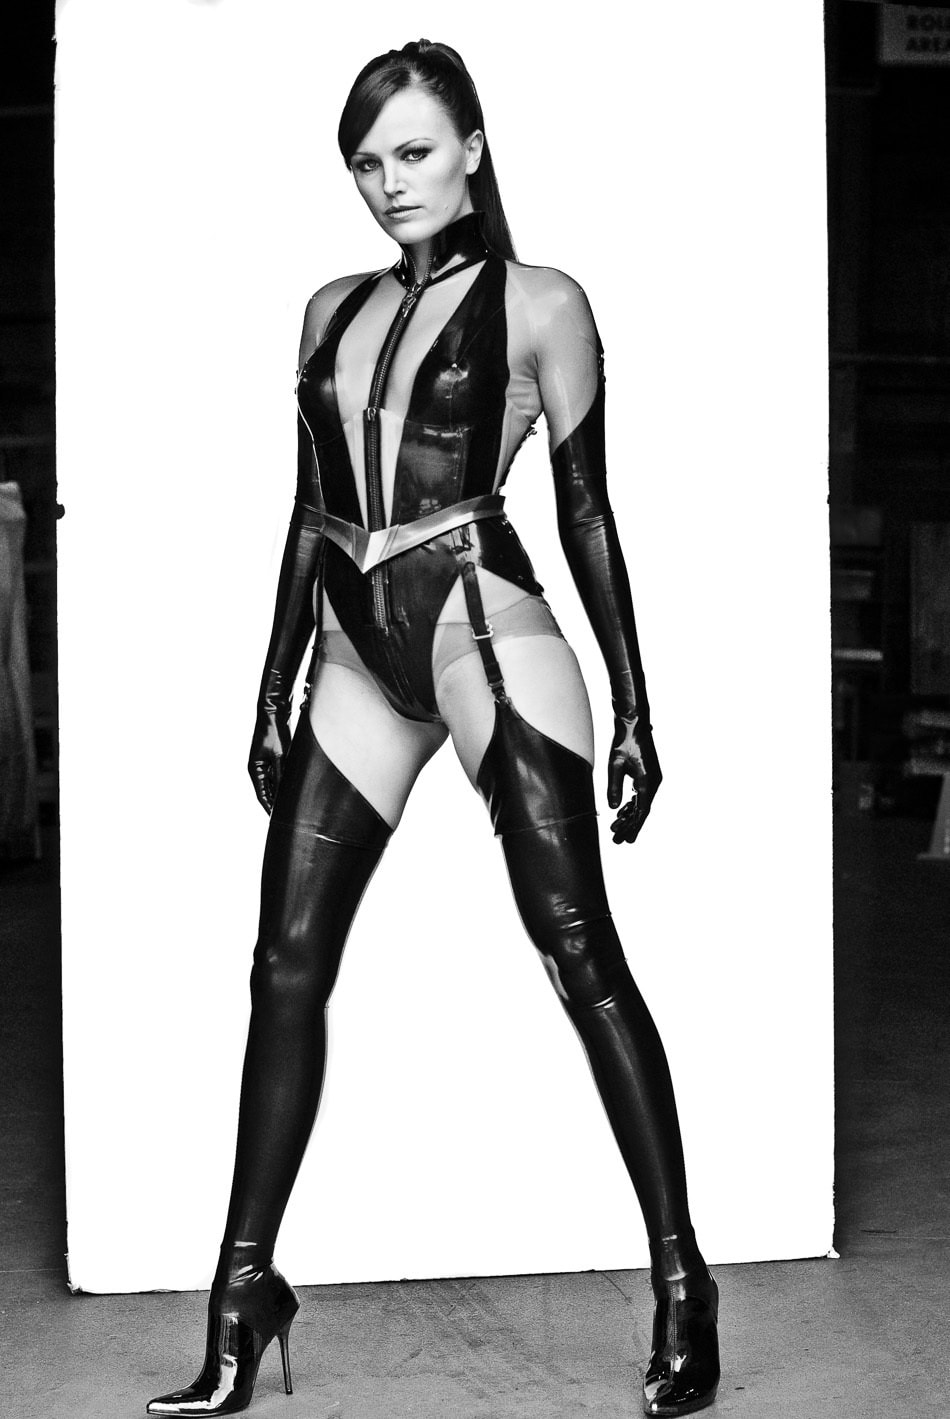 Malin Akerman in a promo shot for Watchmen showcasing her full costume